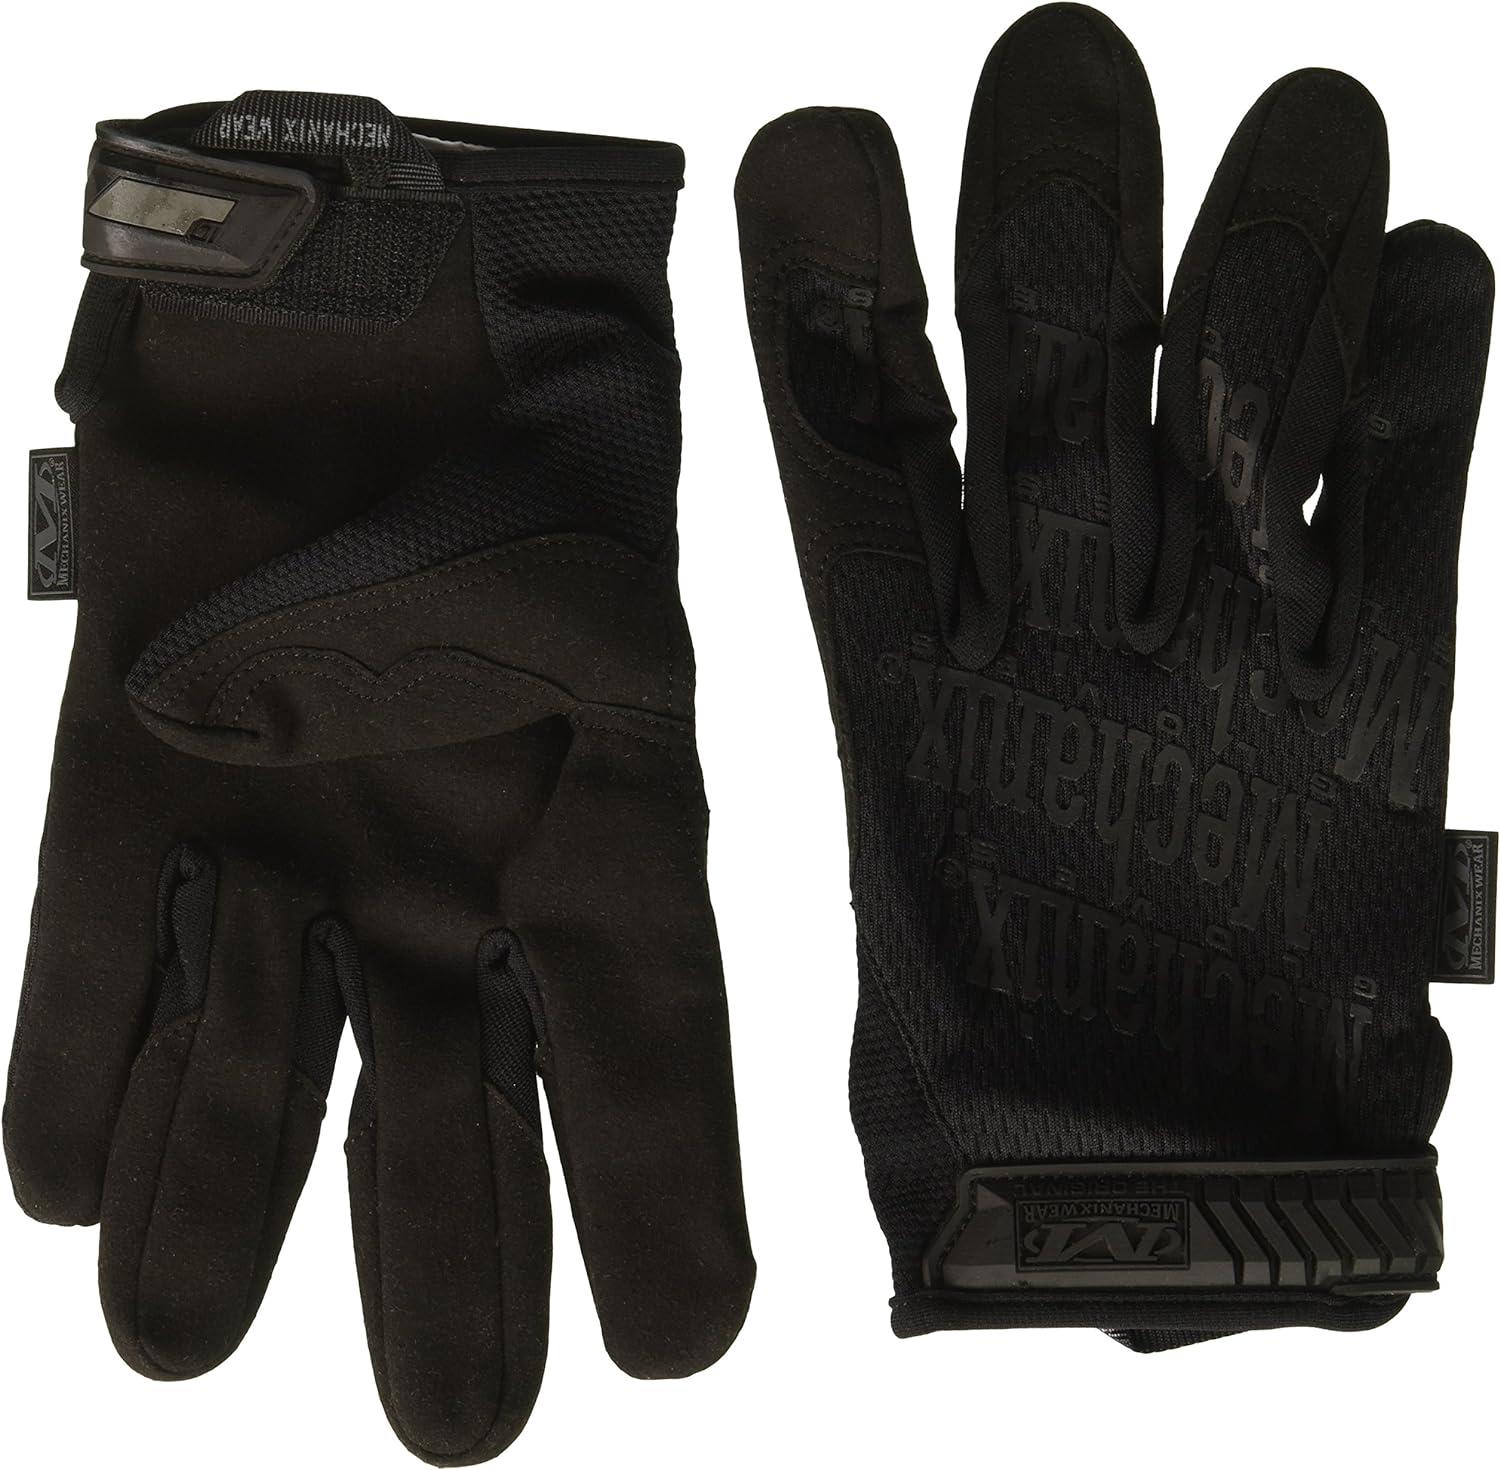 Mechanix Wear Original Glove for $3.38